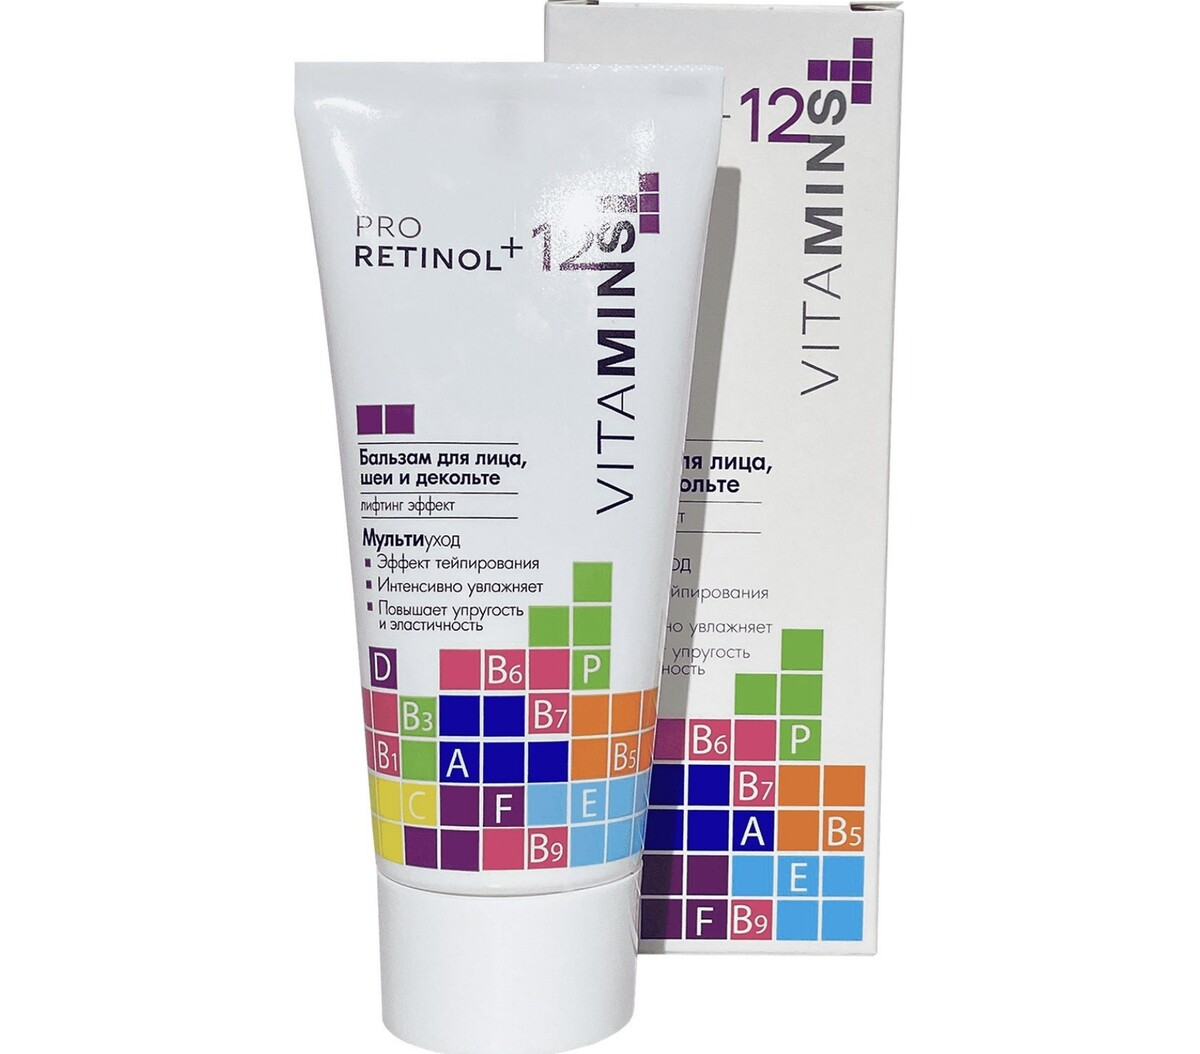 Pro retinol + 12 vitamins бальзам для лица, шеи и декольте, 50г pro retinol 12 vitamins флюид нормализующий для лица 50г